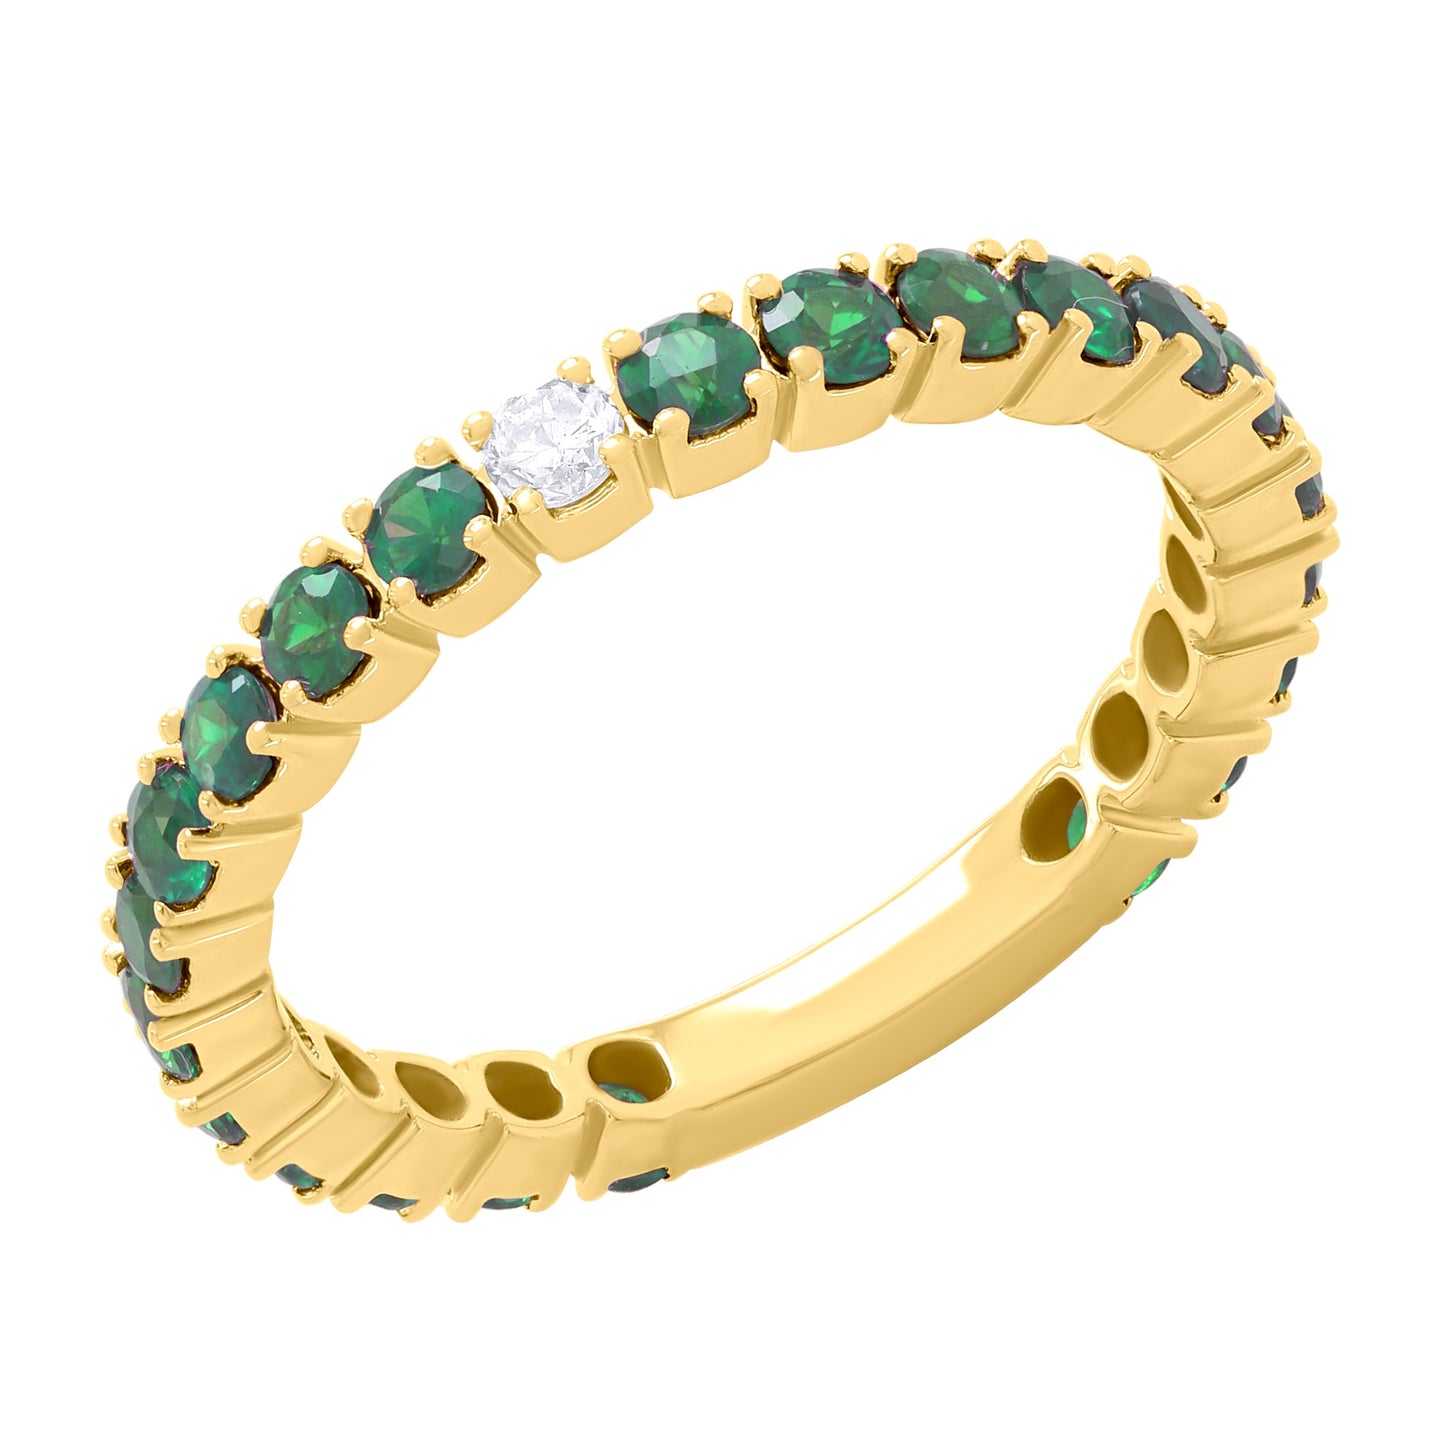 Single Diamond and Precious Color Stone Ring 14KY Gold